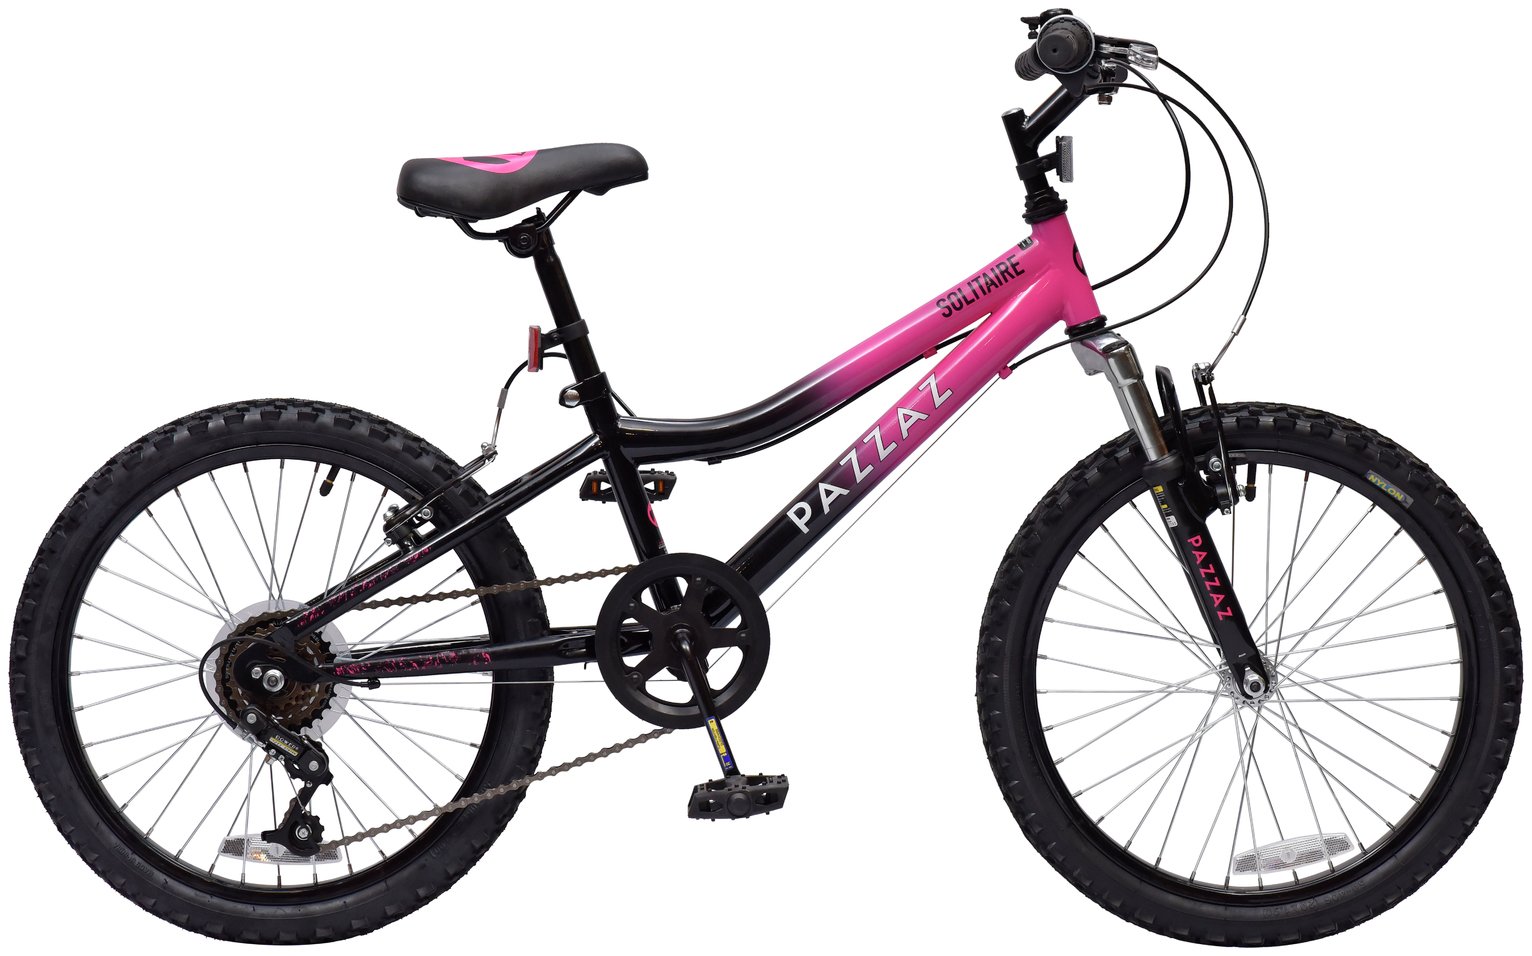 Pazzaz Solitaire Girls 20 Inch Wheel Size Bike 